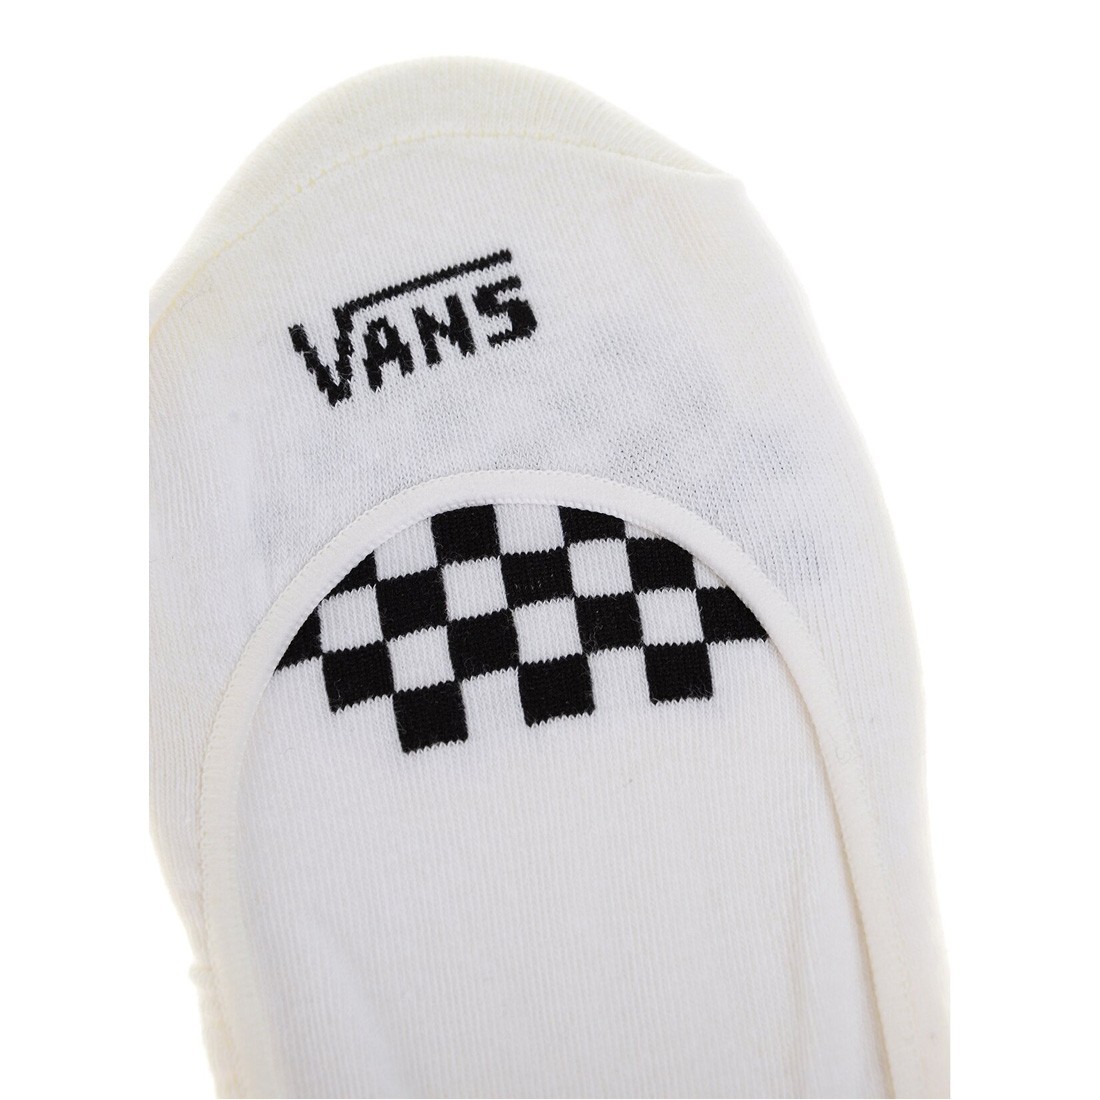 Order Vans Socks Women Vans Girly Ped Socks White/Black - Vans, delivered  to your home | The Outfit